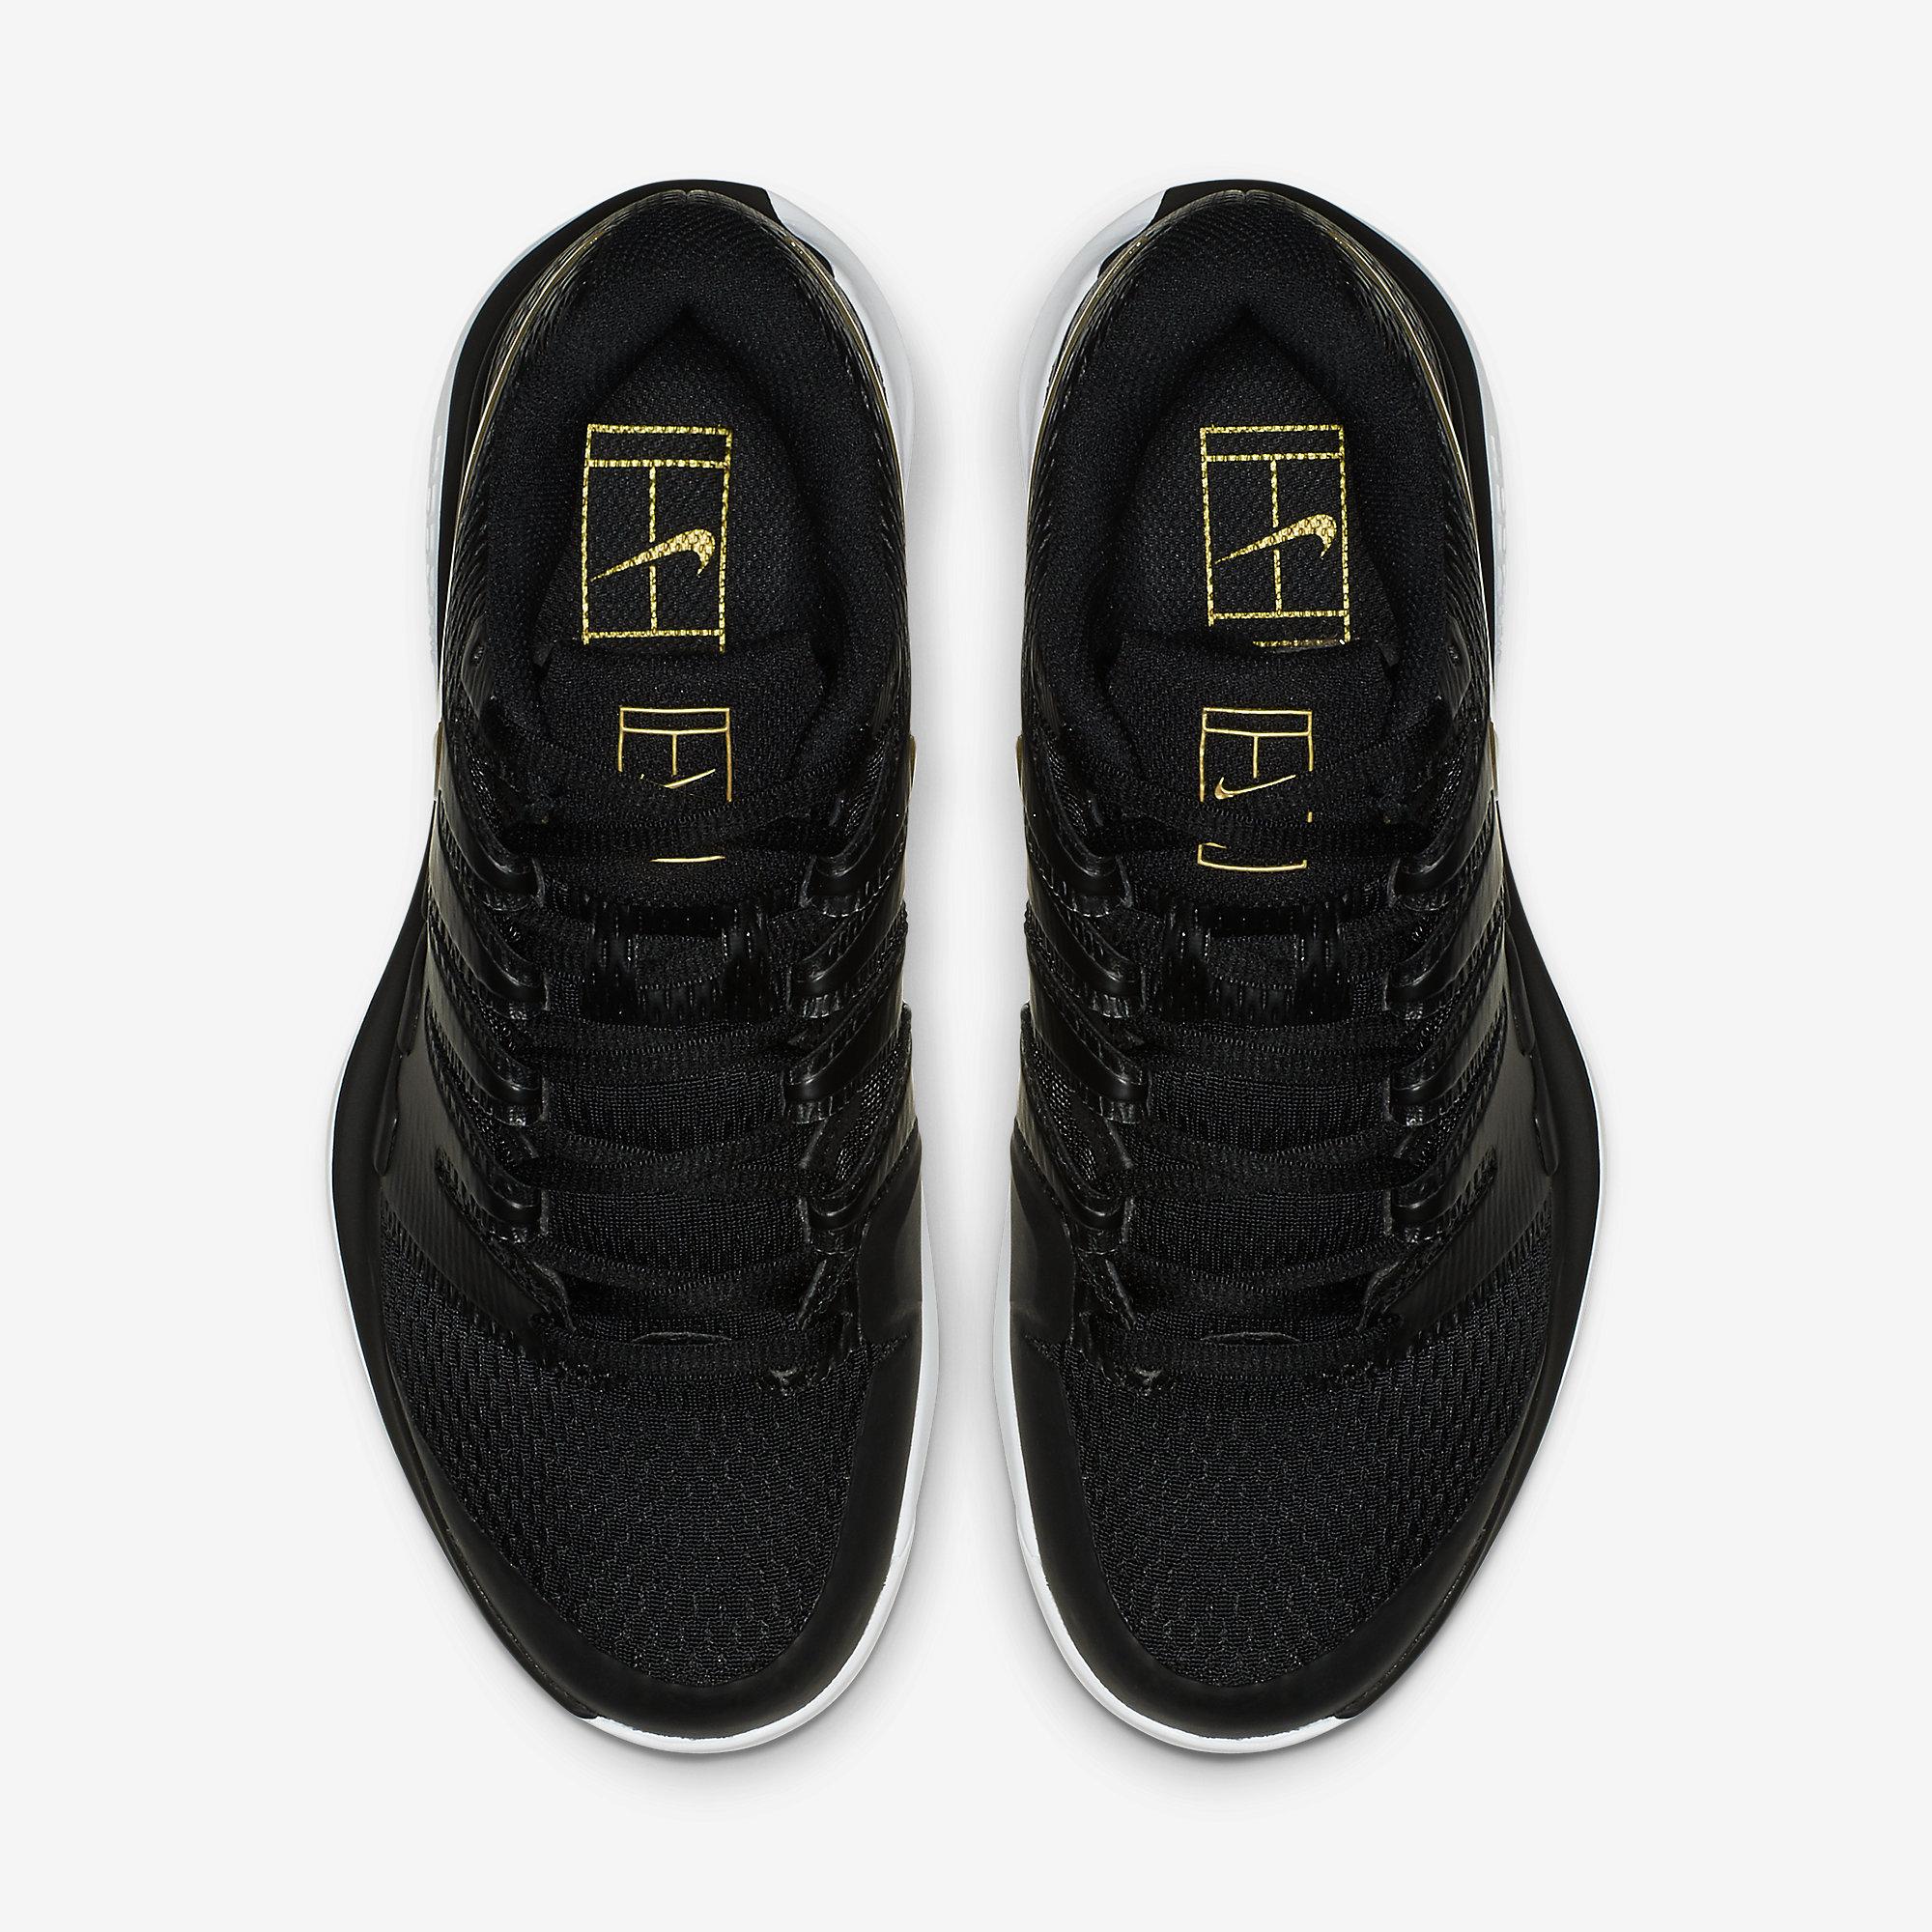 Nike Womens Air Zoom Vapor X Tennis Shoes - Black/Gold - Tennisnuts.com